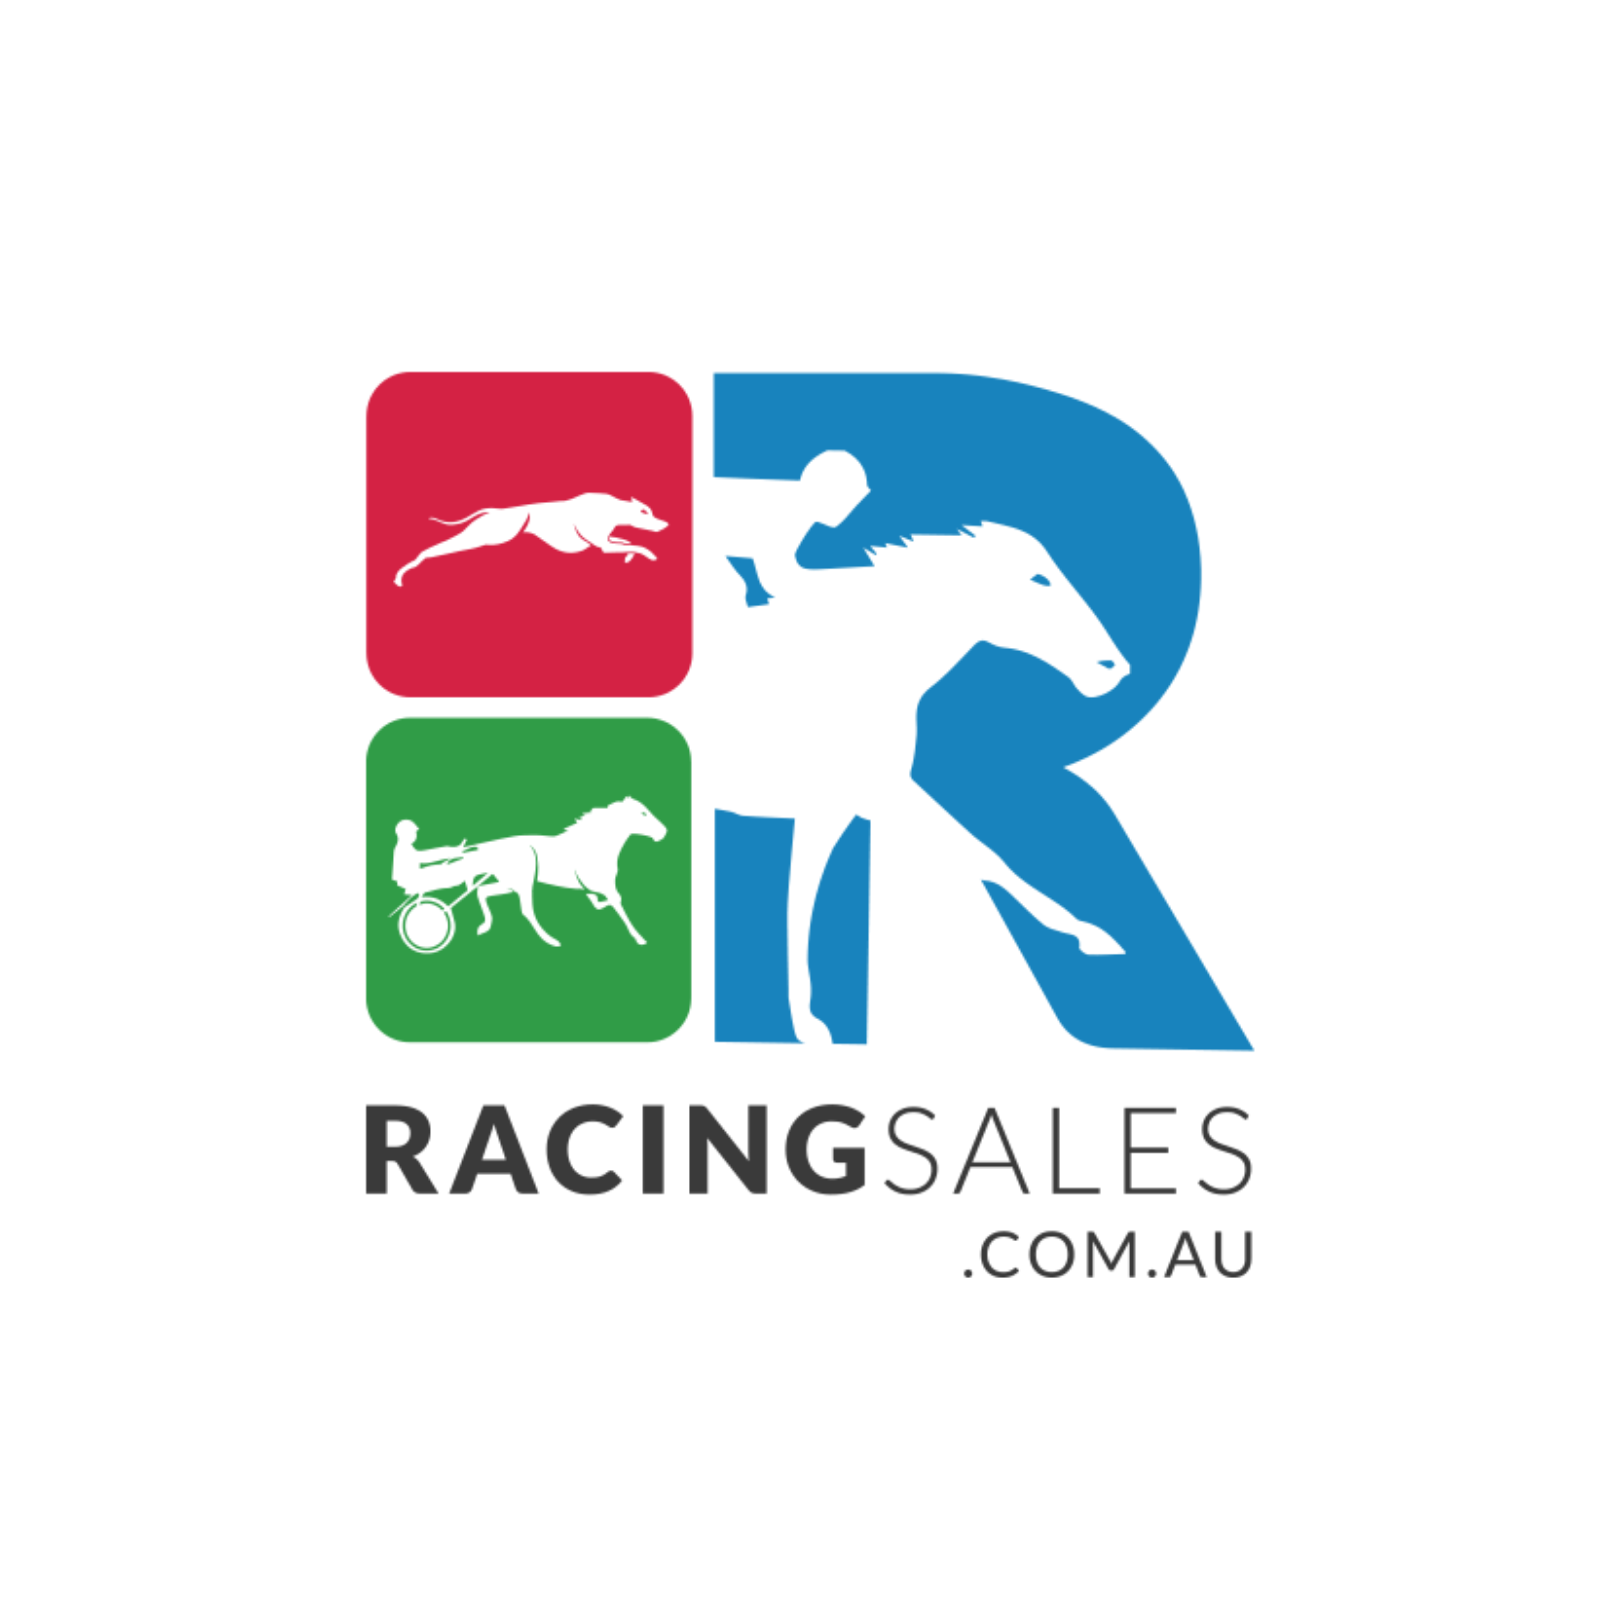  Racing Sales Fred app marketplace partner 